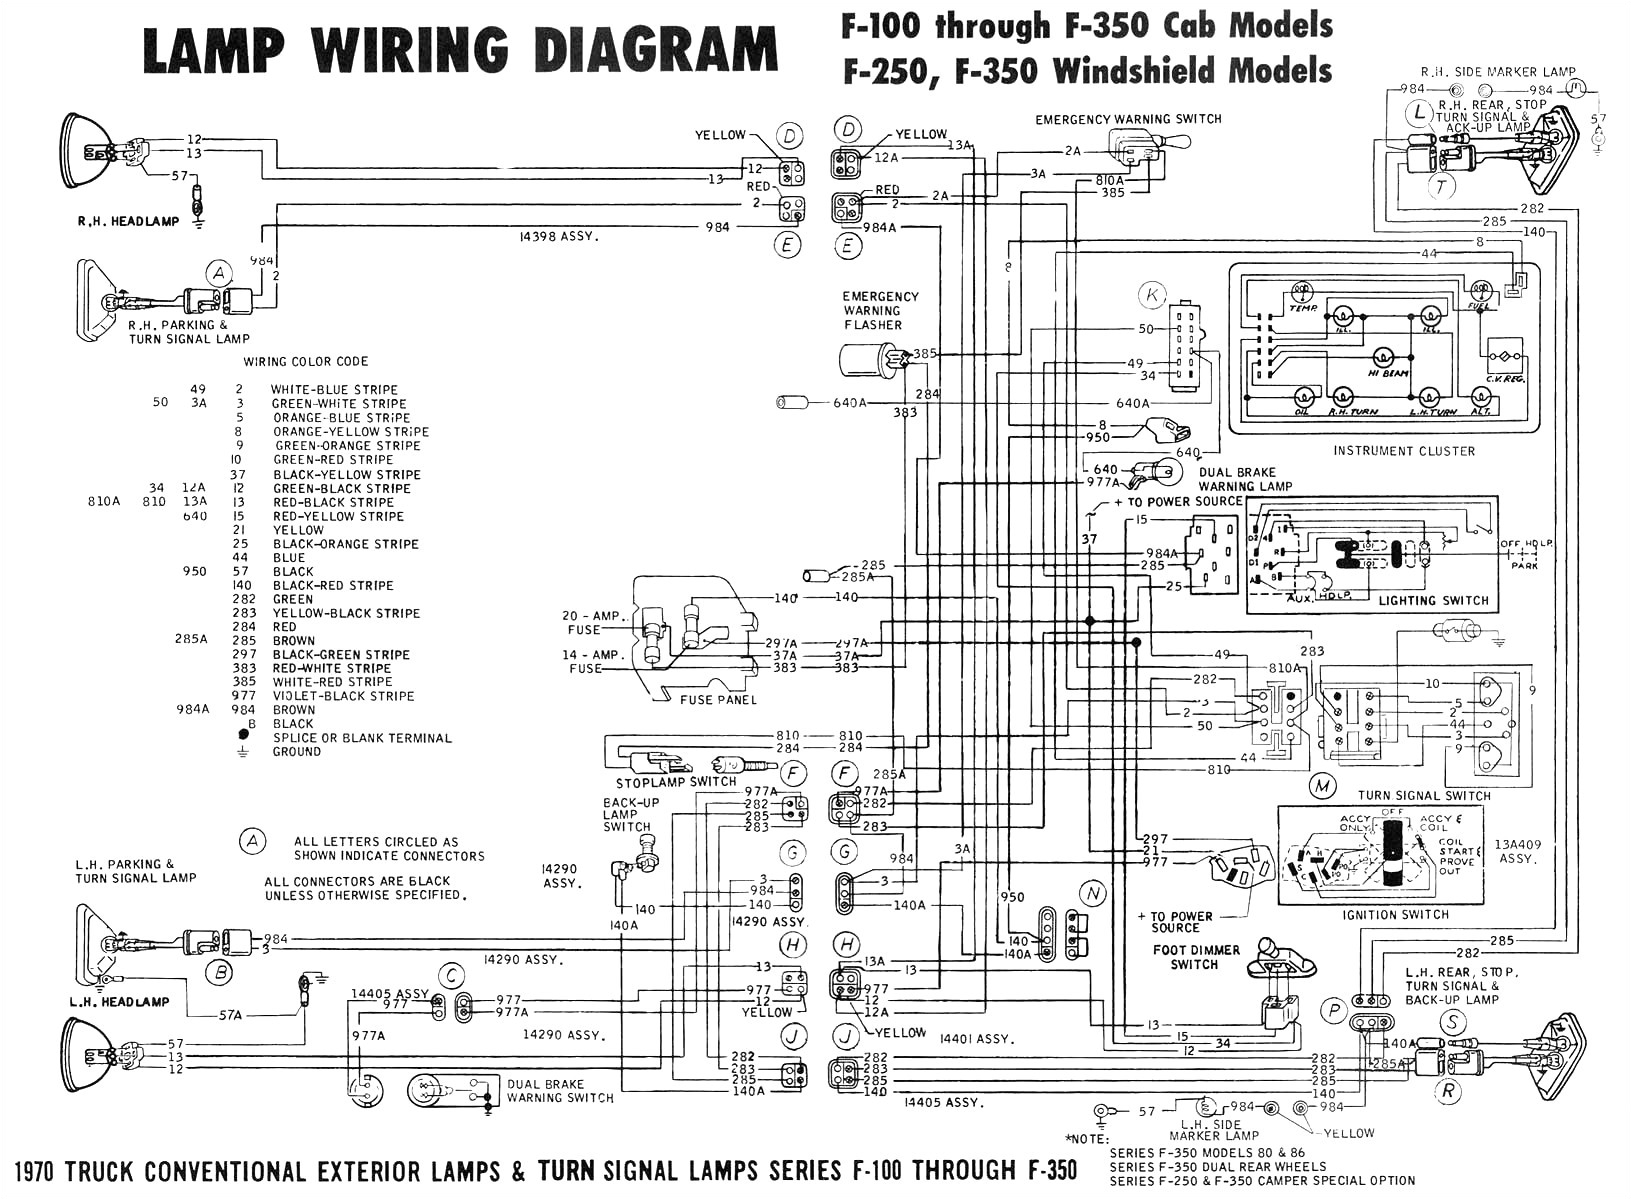 fuse box diagram besides 1990 chevy 350 tbi fuel system diagram wiring diagram for 1996 chevy vortec 57l chevrolet forum chevy